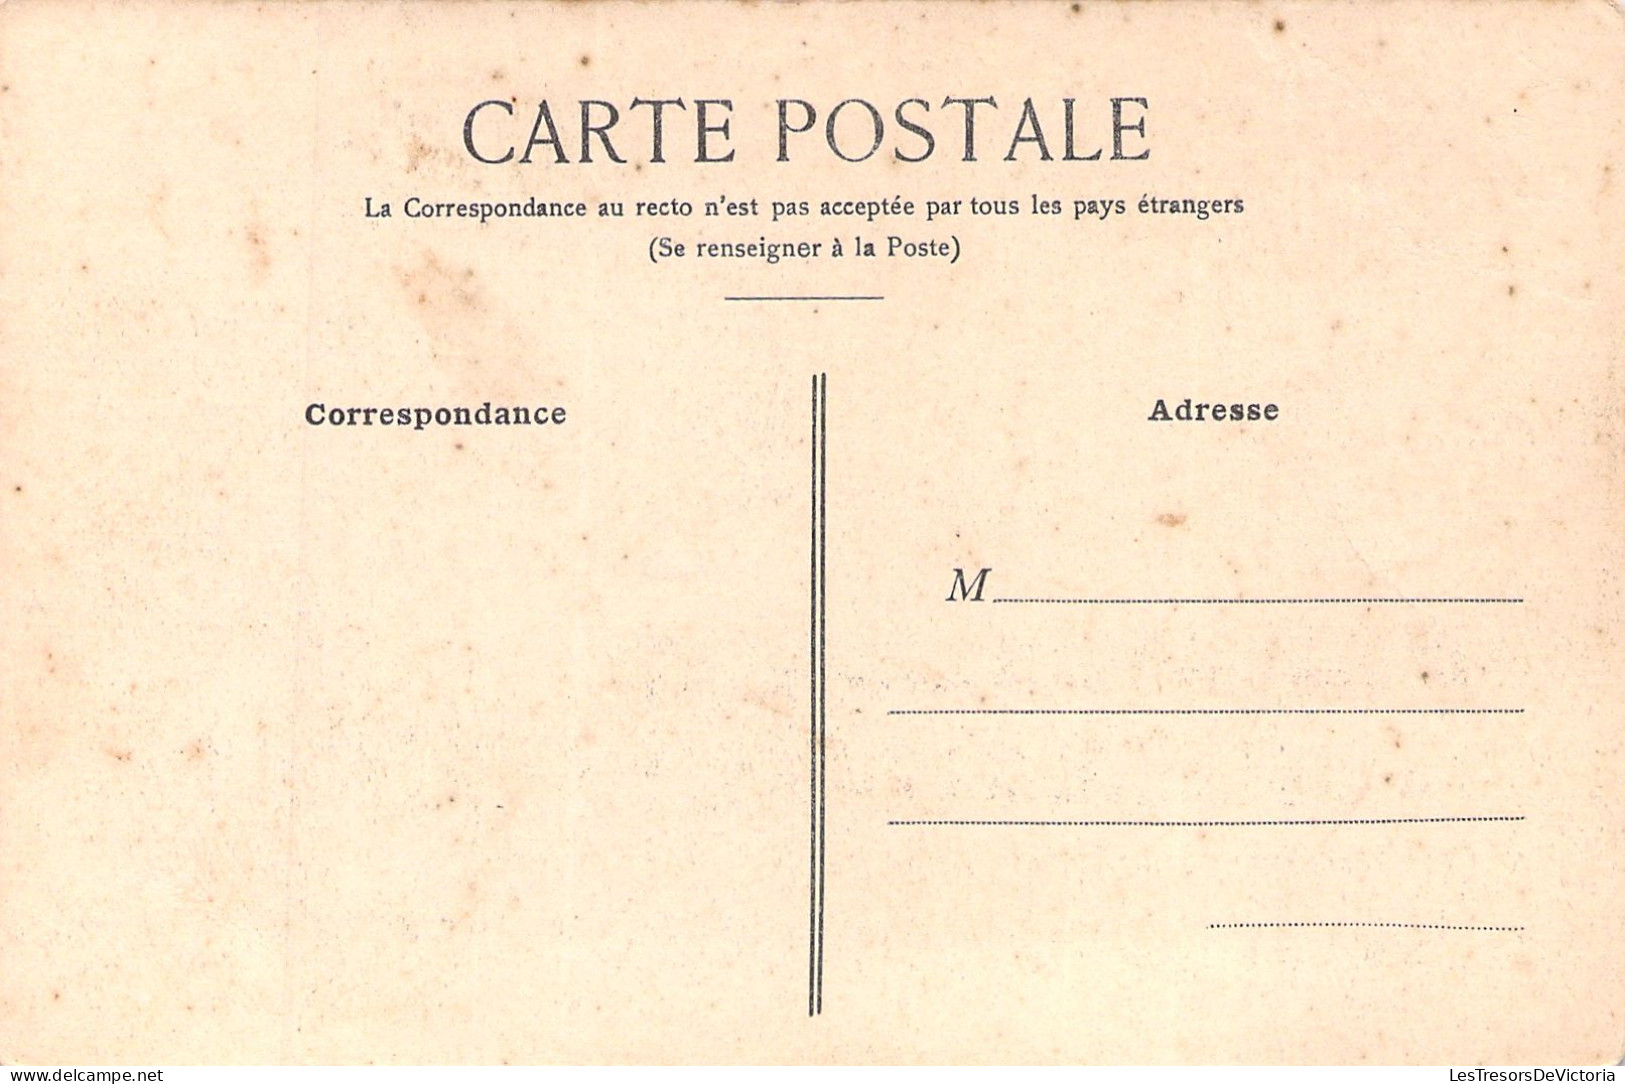 NOUVELLE CALEDONIE - NOUMEA - Hopital Militaire - Carte Postale Ancienne - New Caledonia